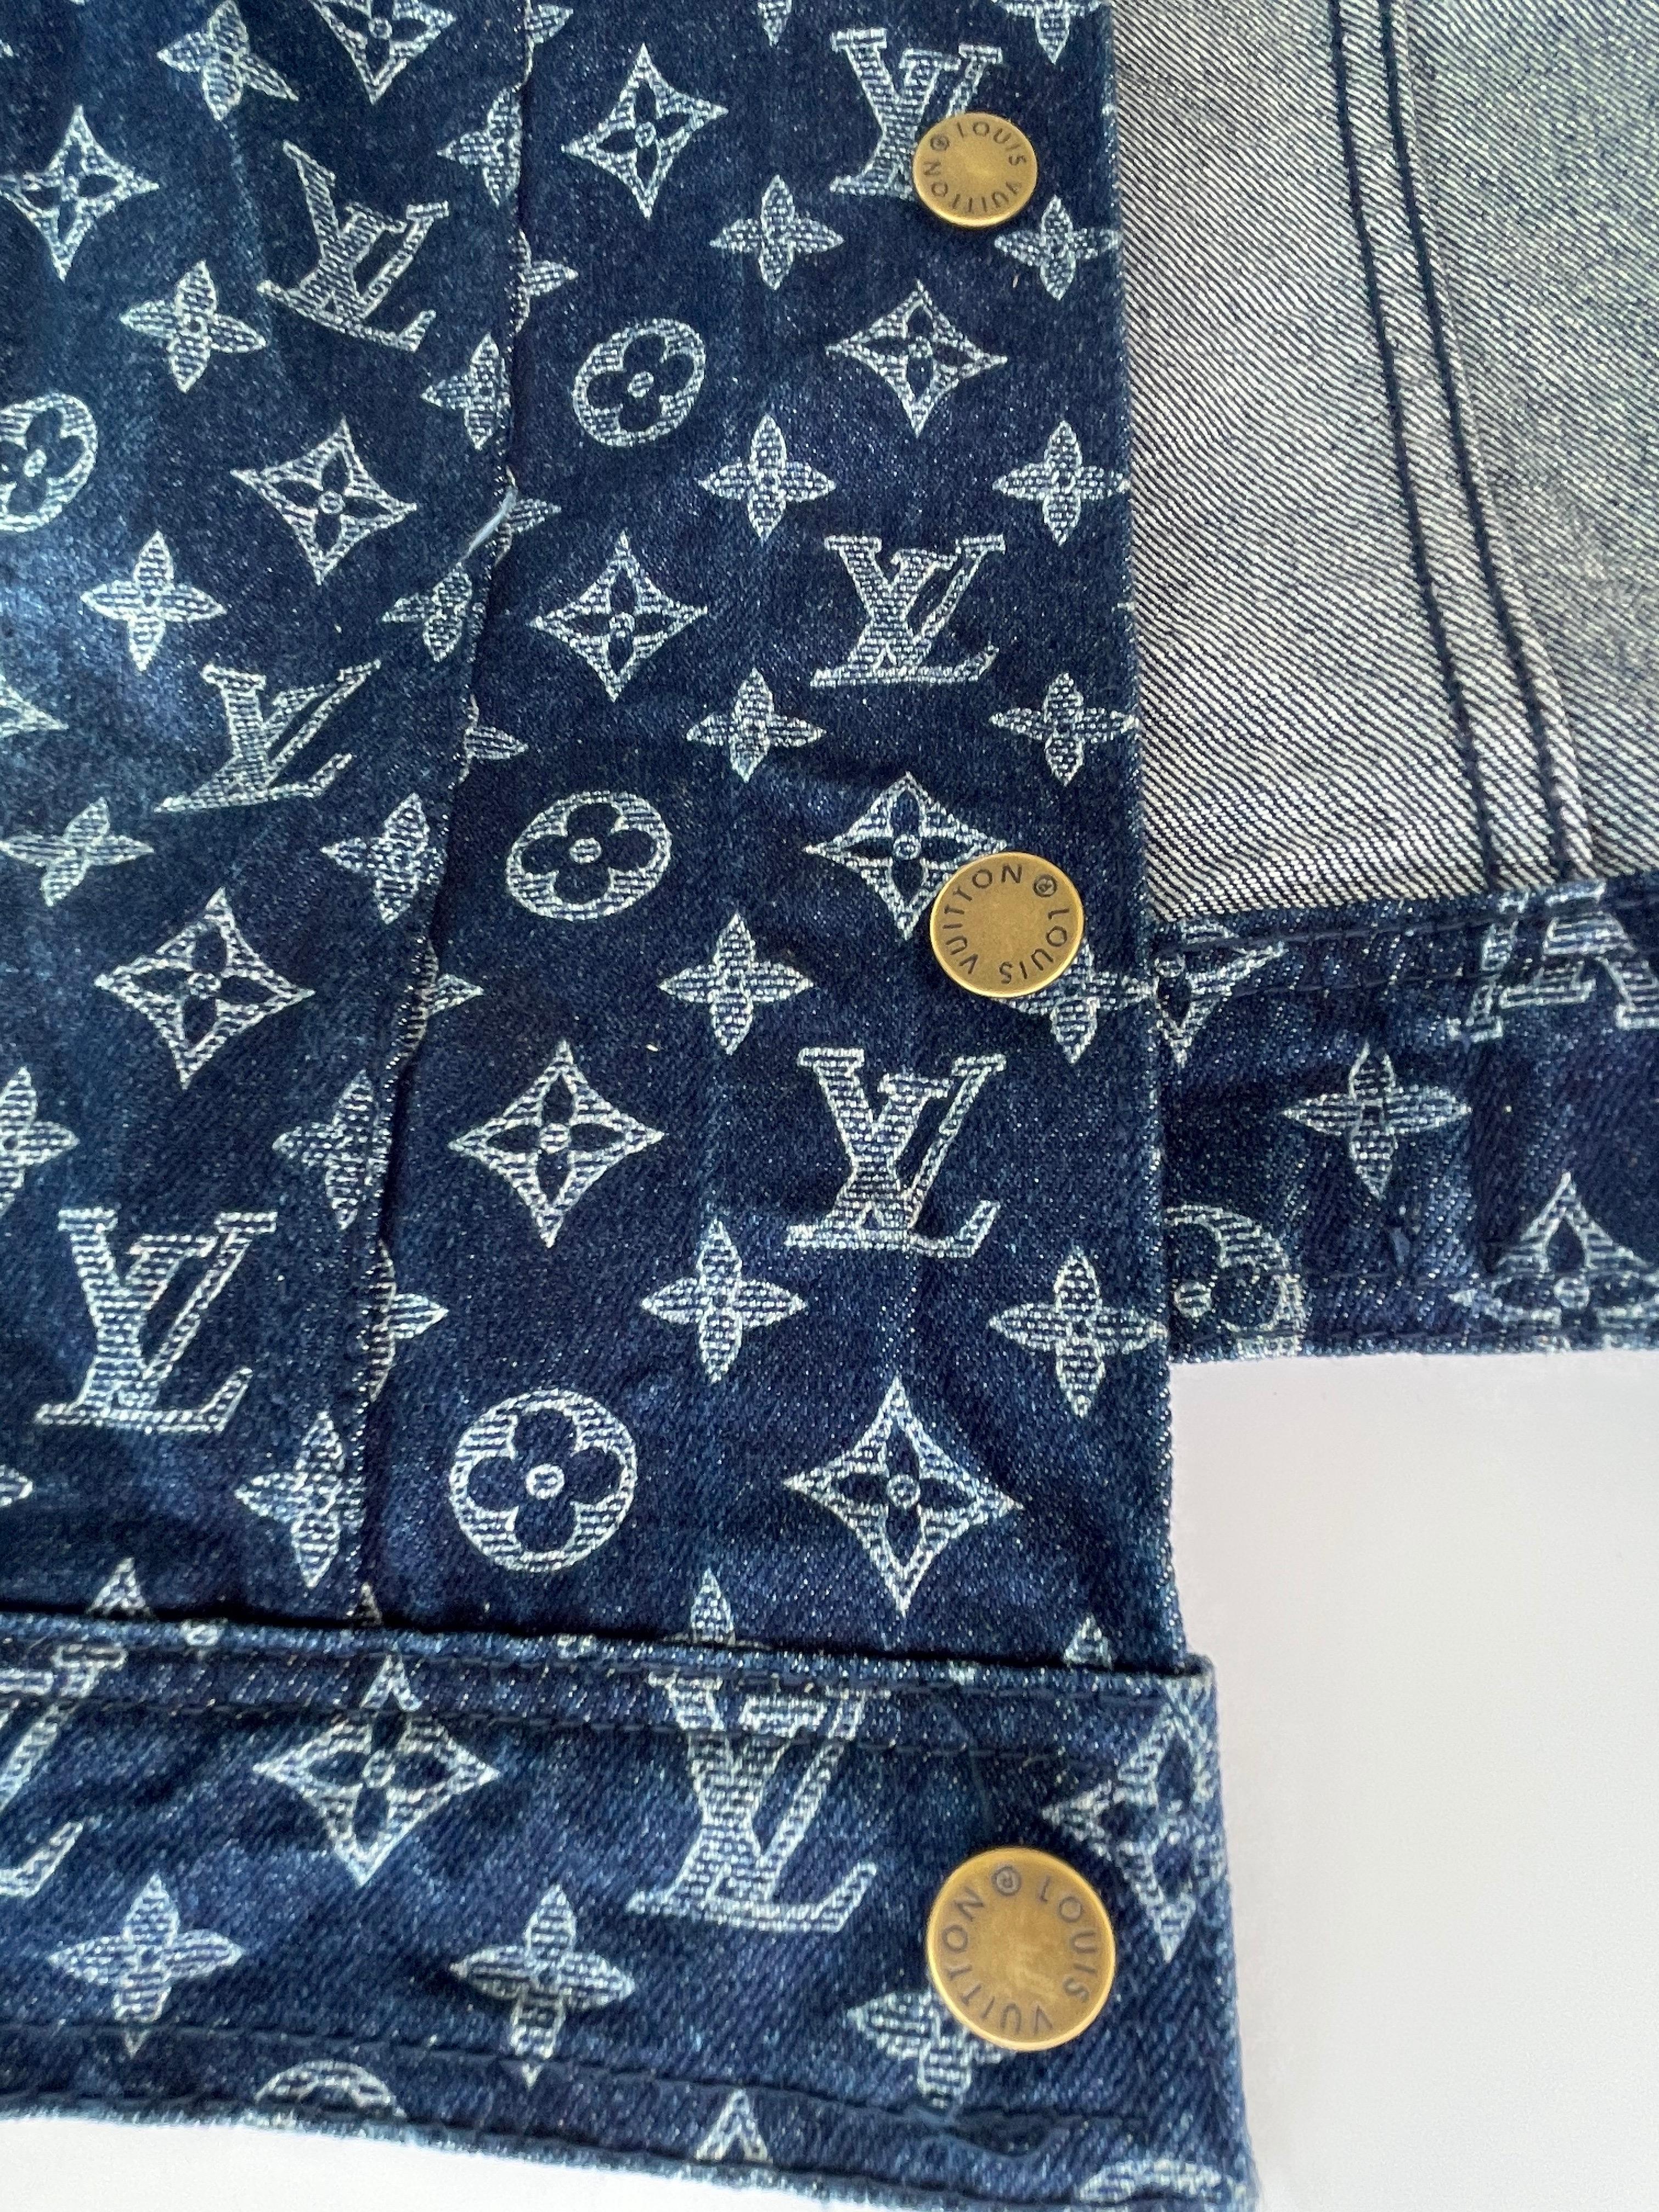 Women's or Men's Louis Vuitton Kim Jones Monogram Denim Jacket (Large)